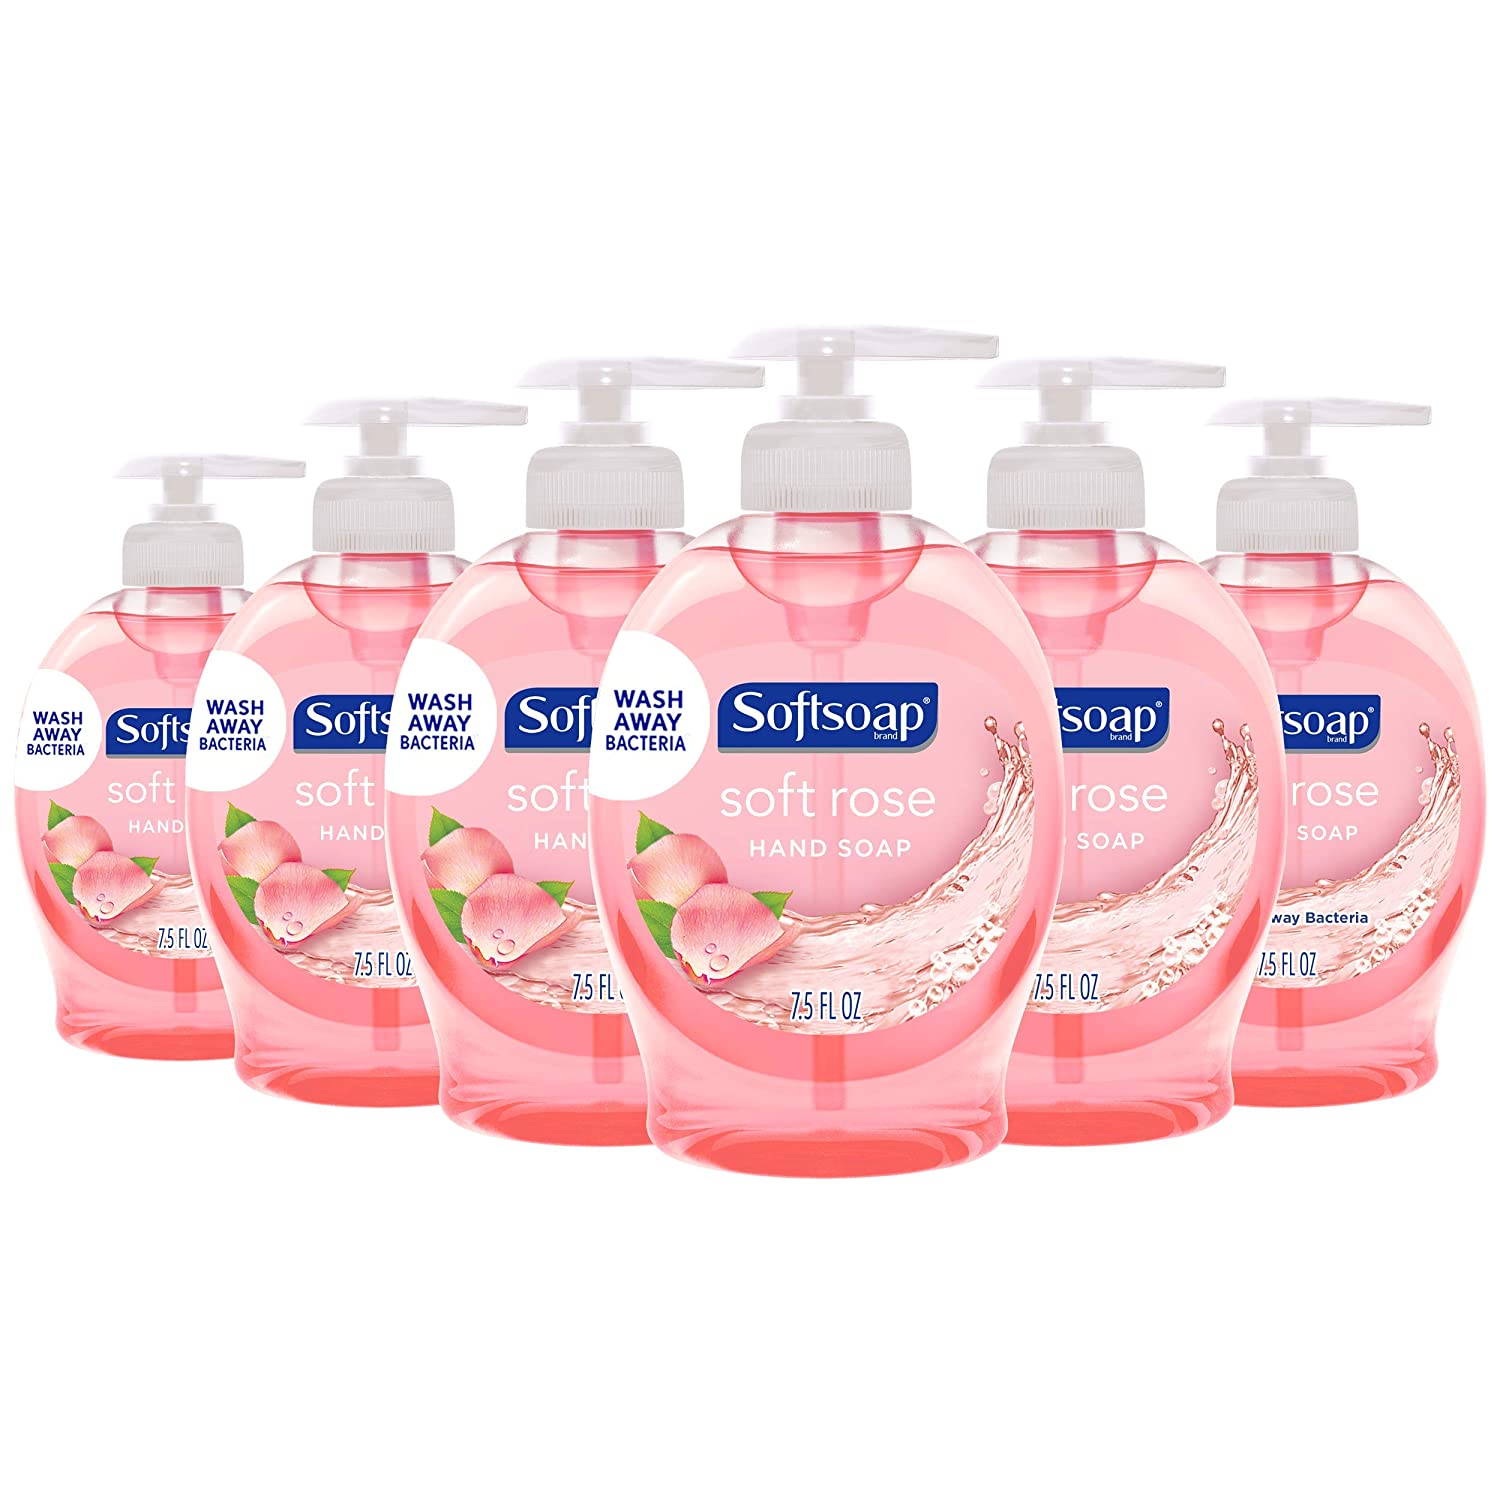 ''SoftSOAP Liquid Hand SOAP, Soft Rose - 7.5 fluid ounce (6 Pack)''